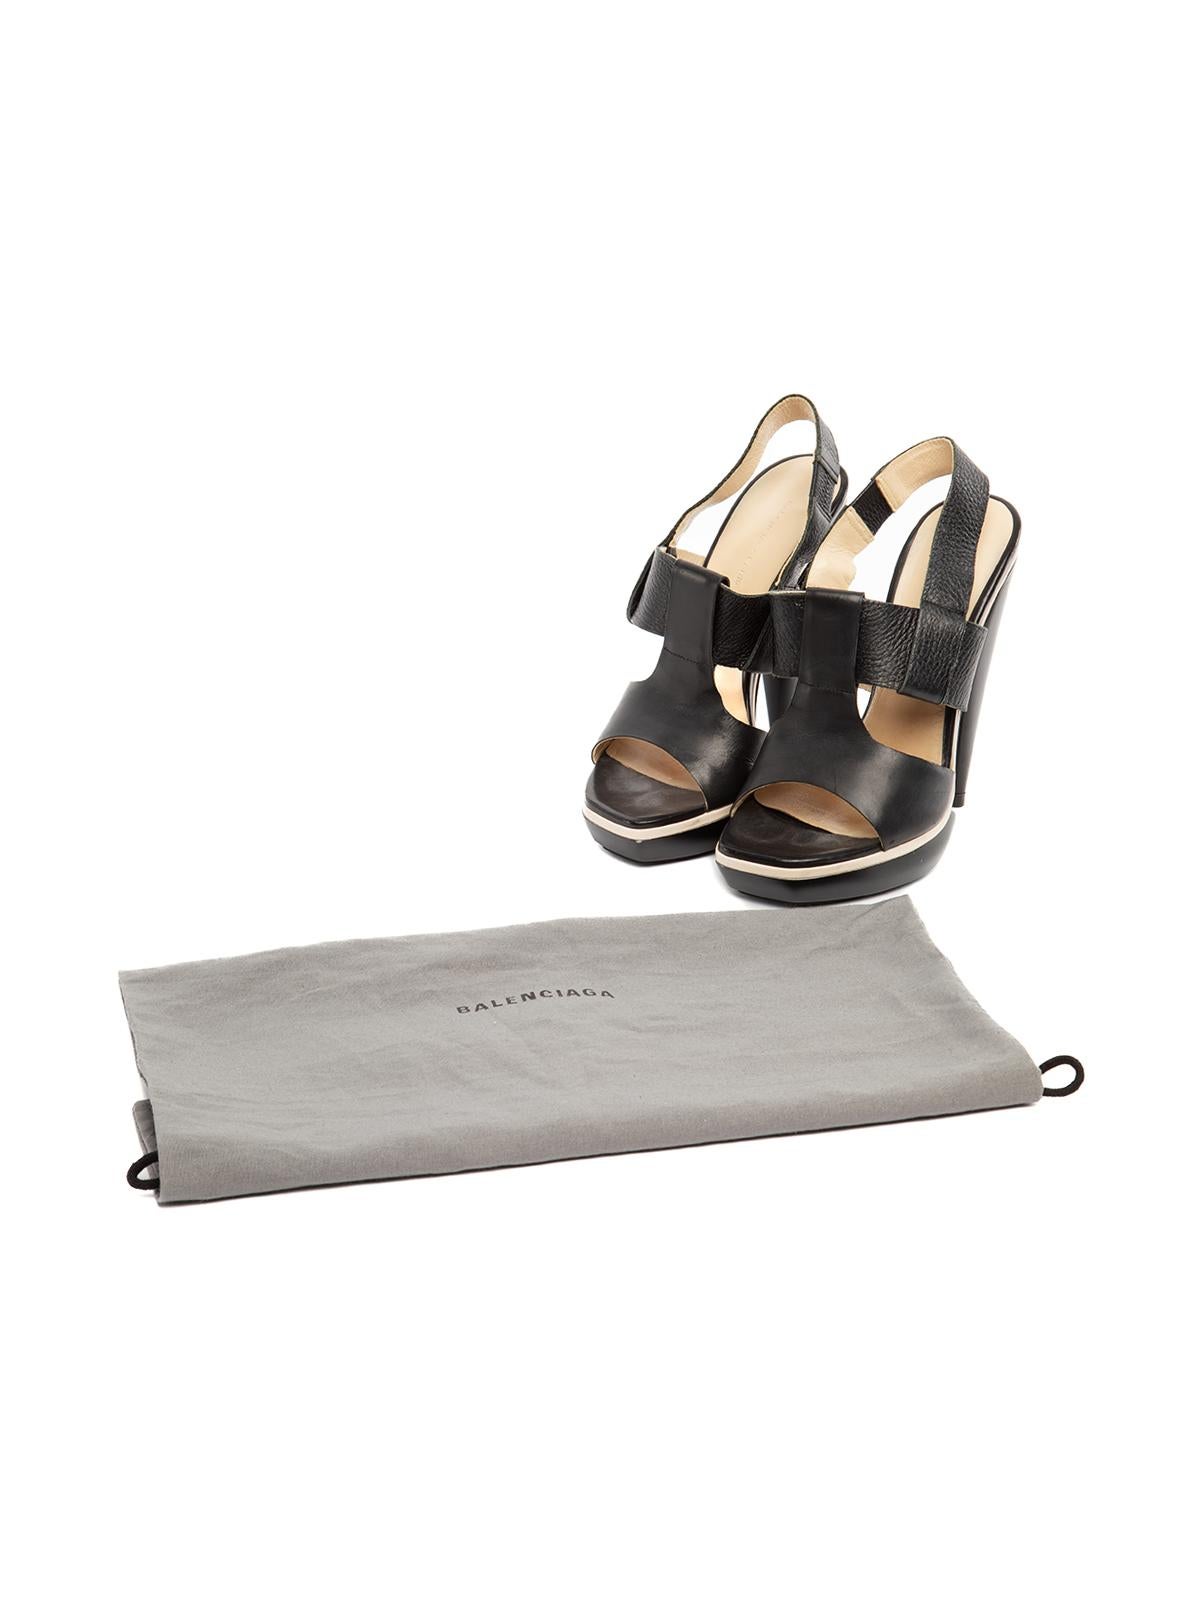 Balenciaga Women's Leather Slingback Heel For Sale 5